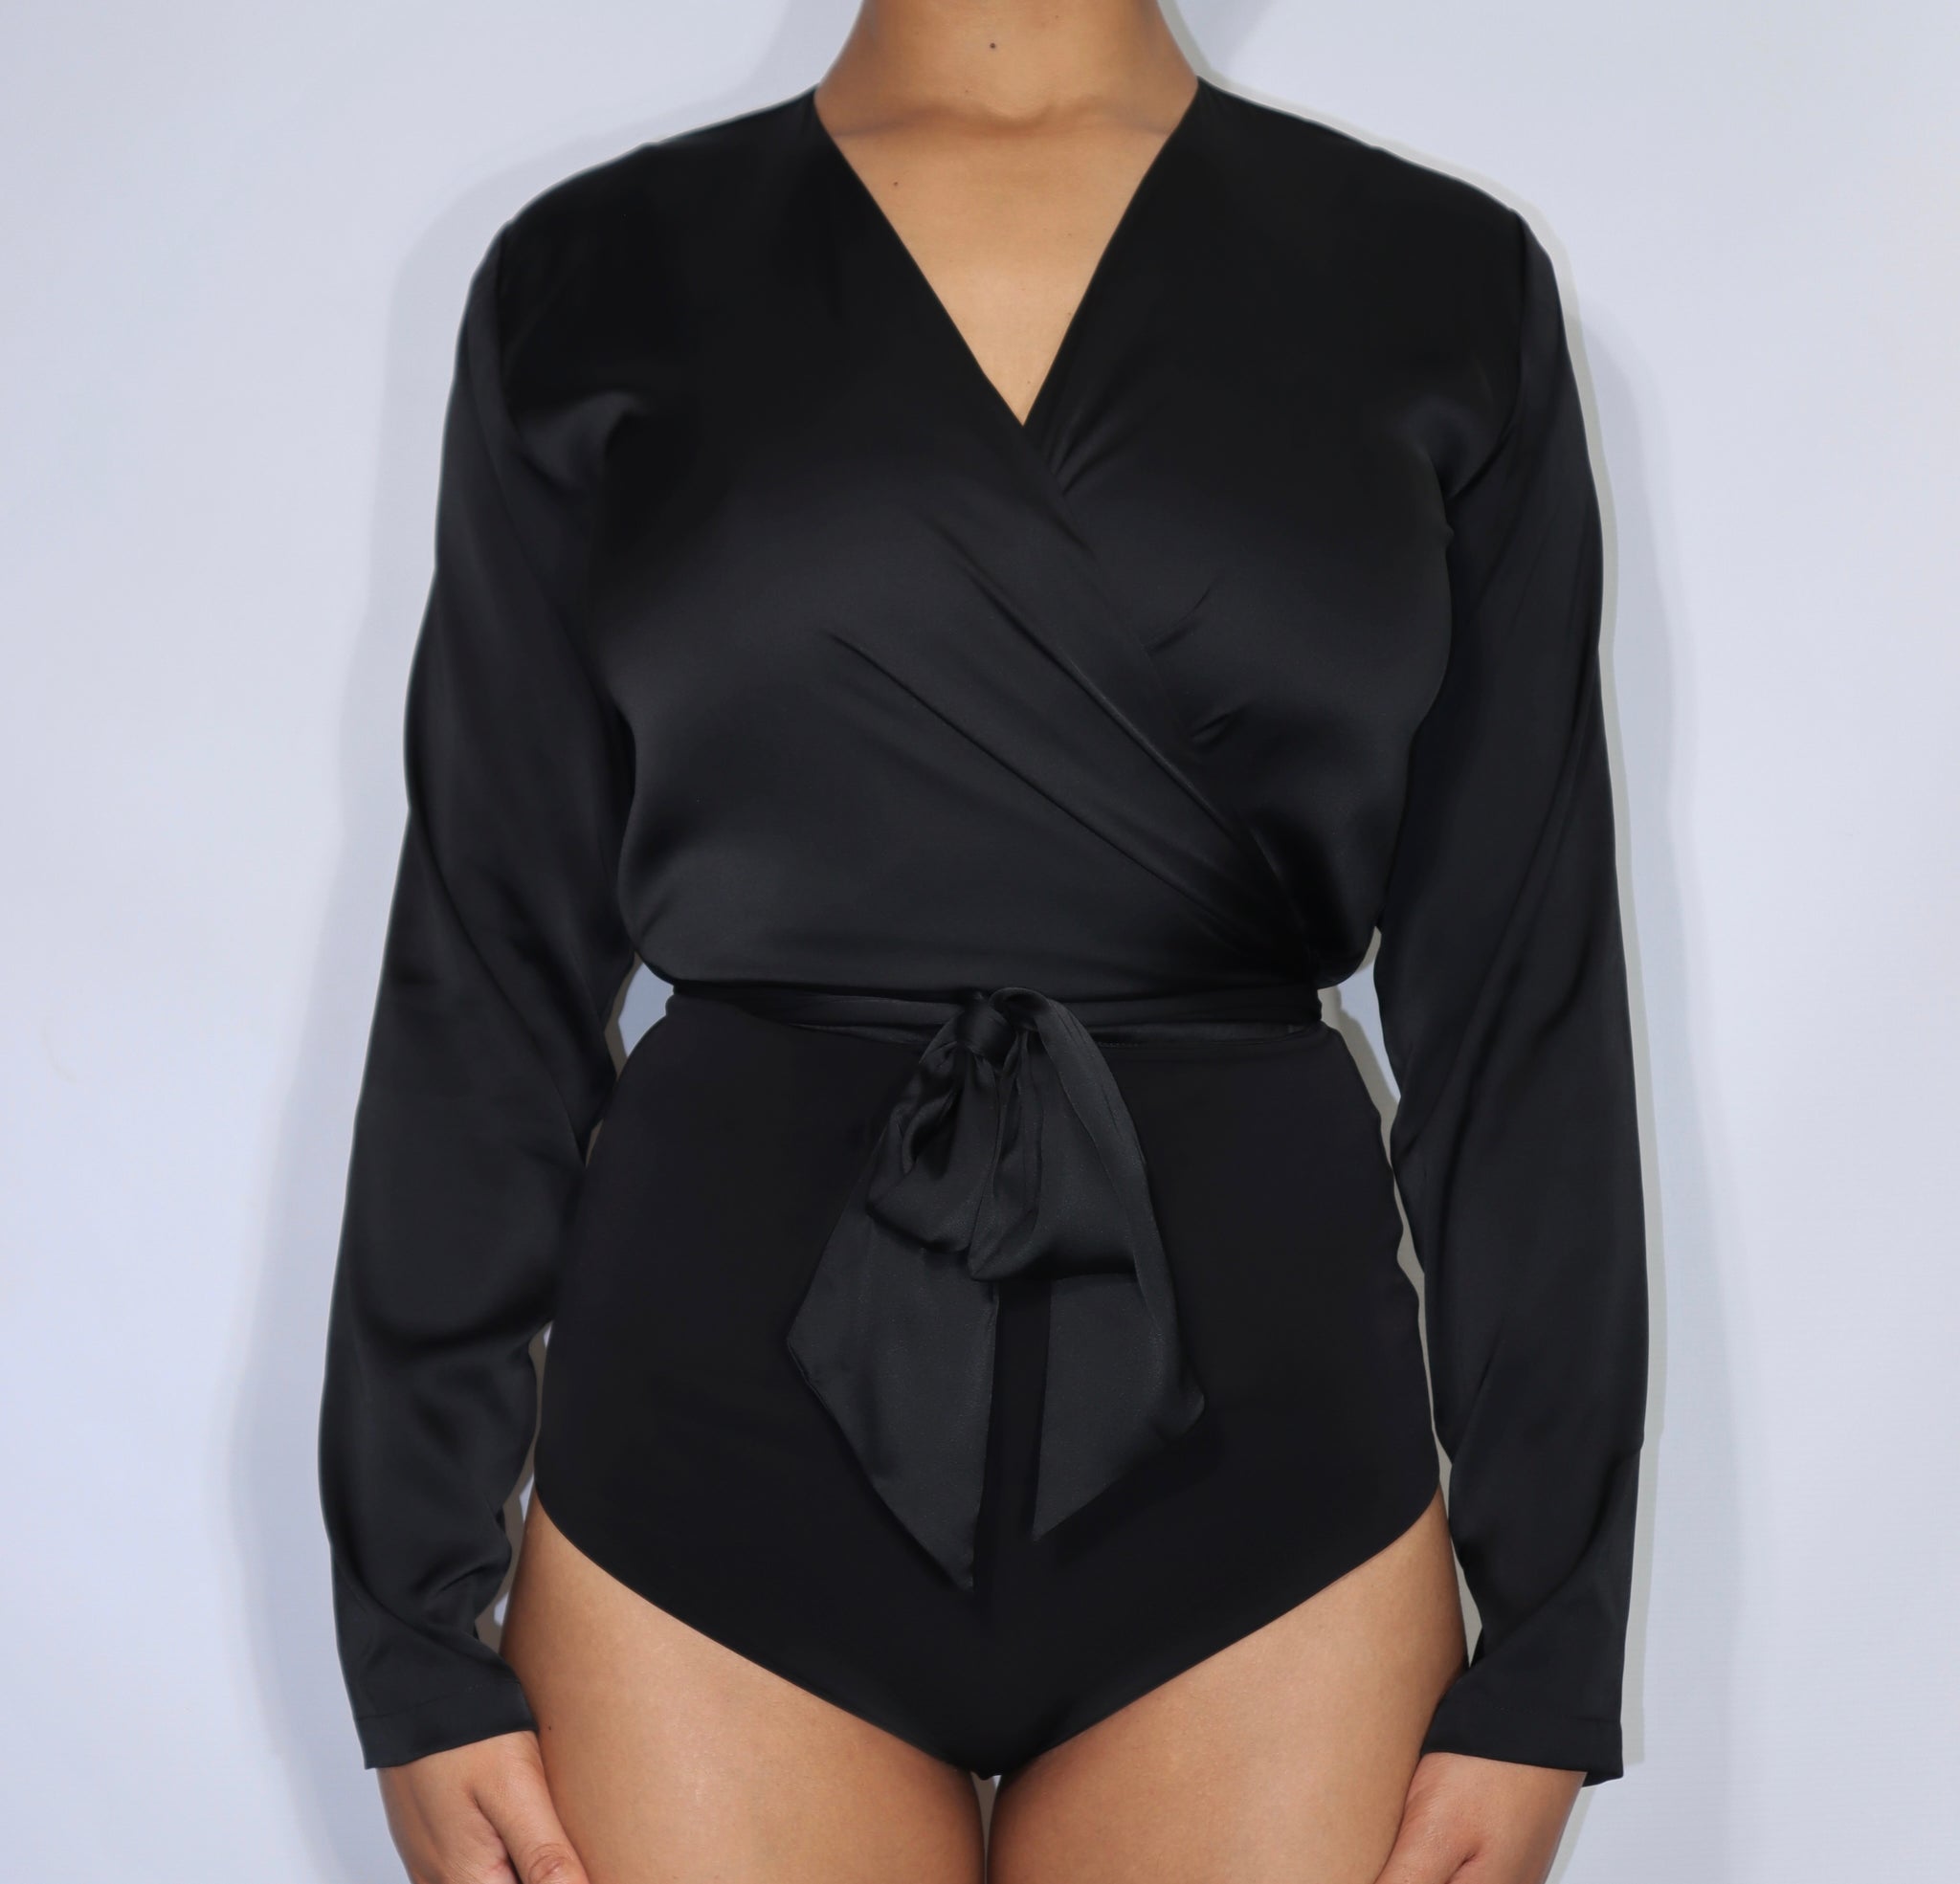 Multiway Georgia Bodysuit - 7 Styles In One (Black)